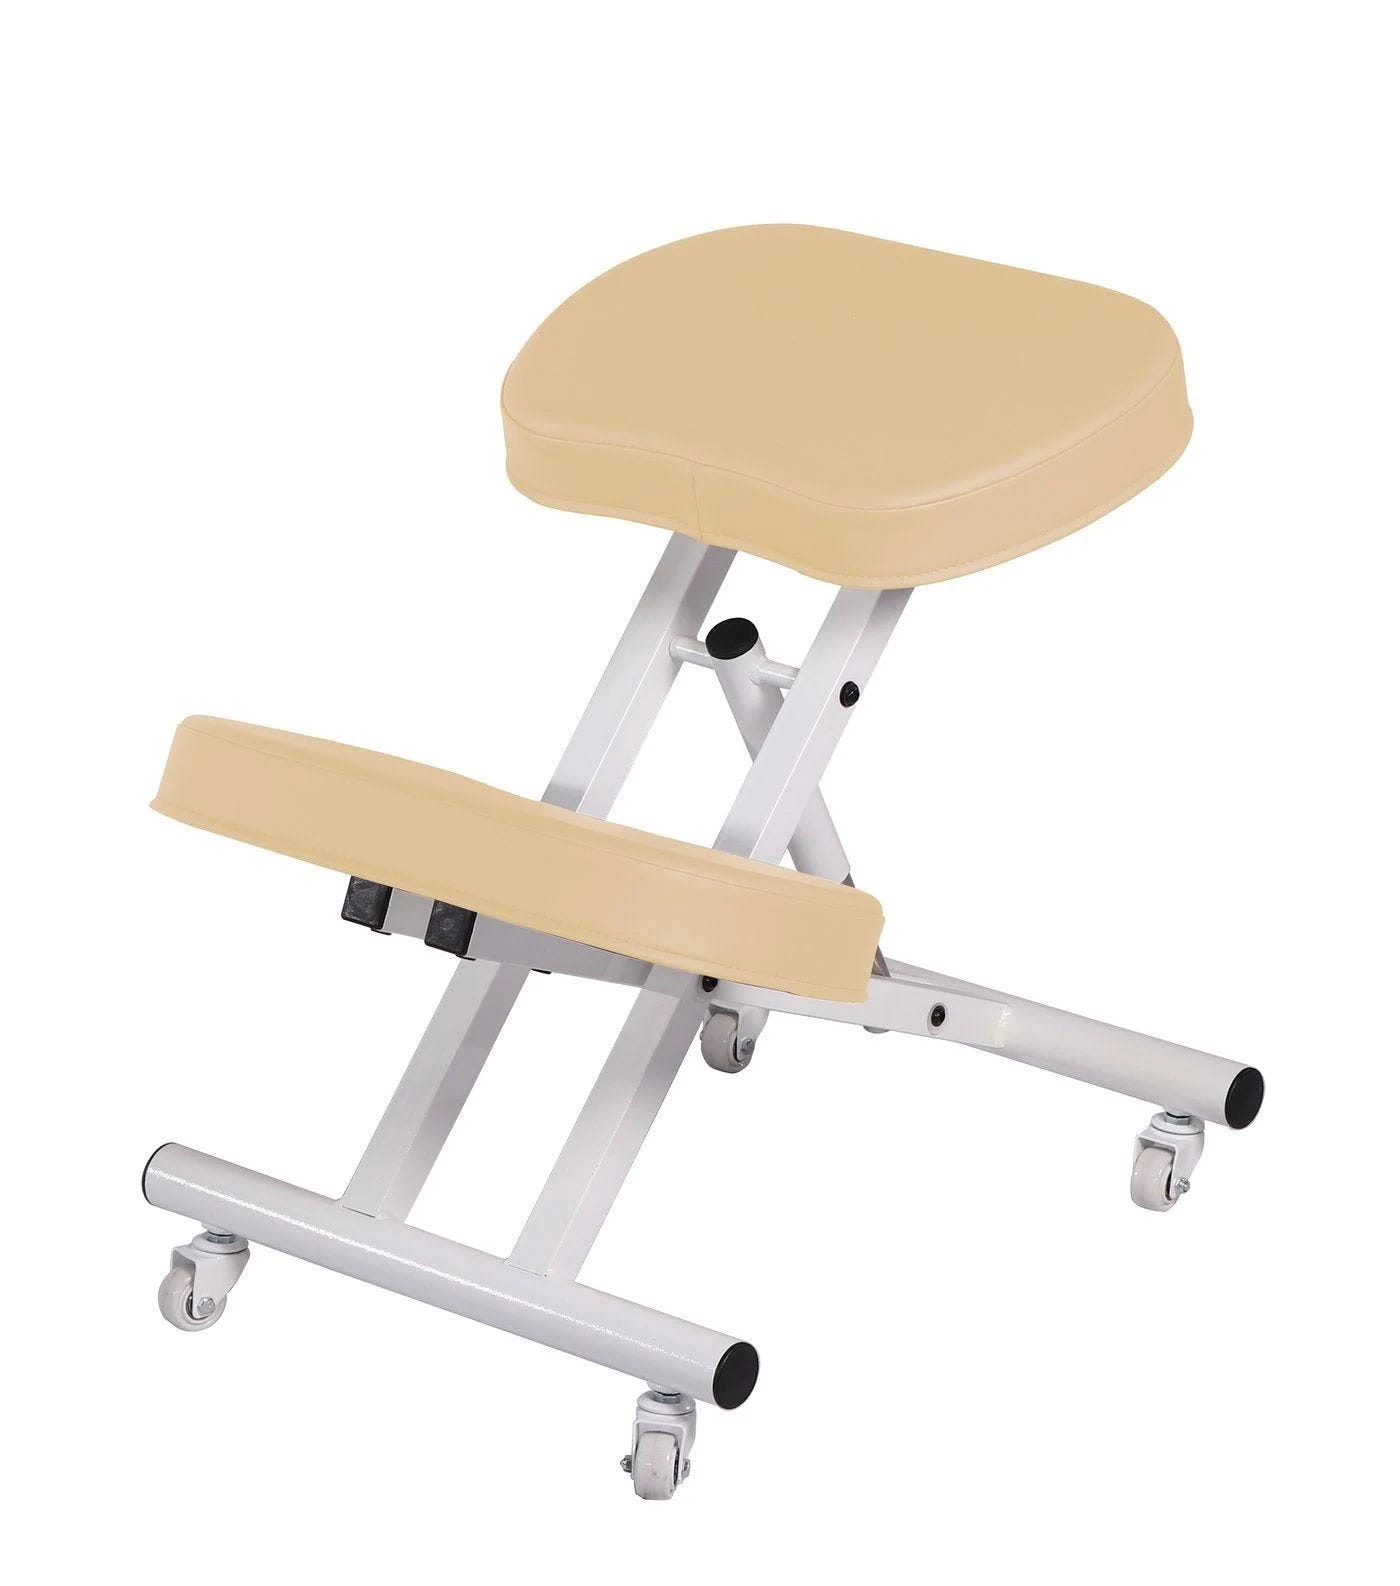 Comfortable Ergonomic Steel Kneeling Chair with Adjustable Height and Wheels | Image